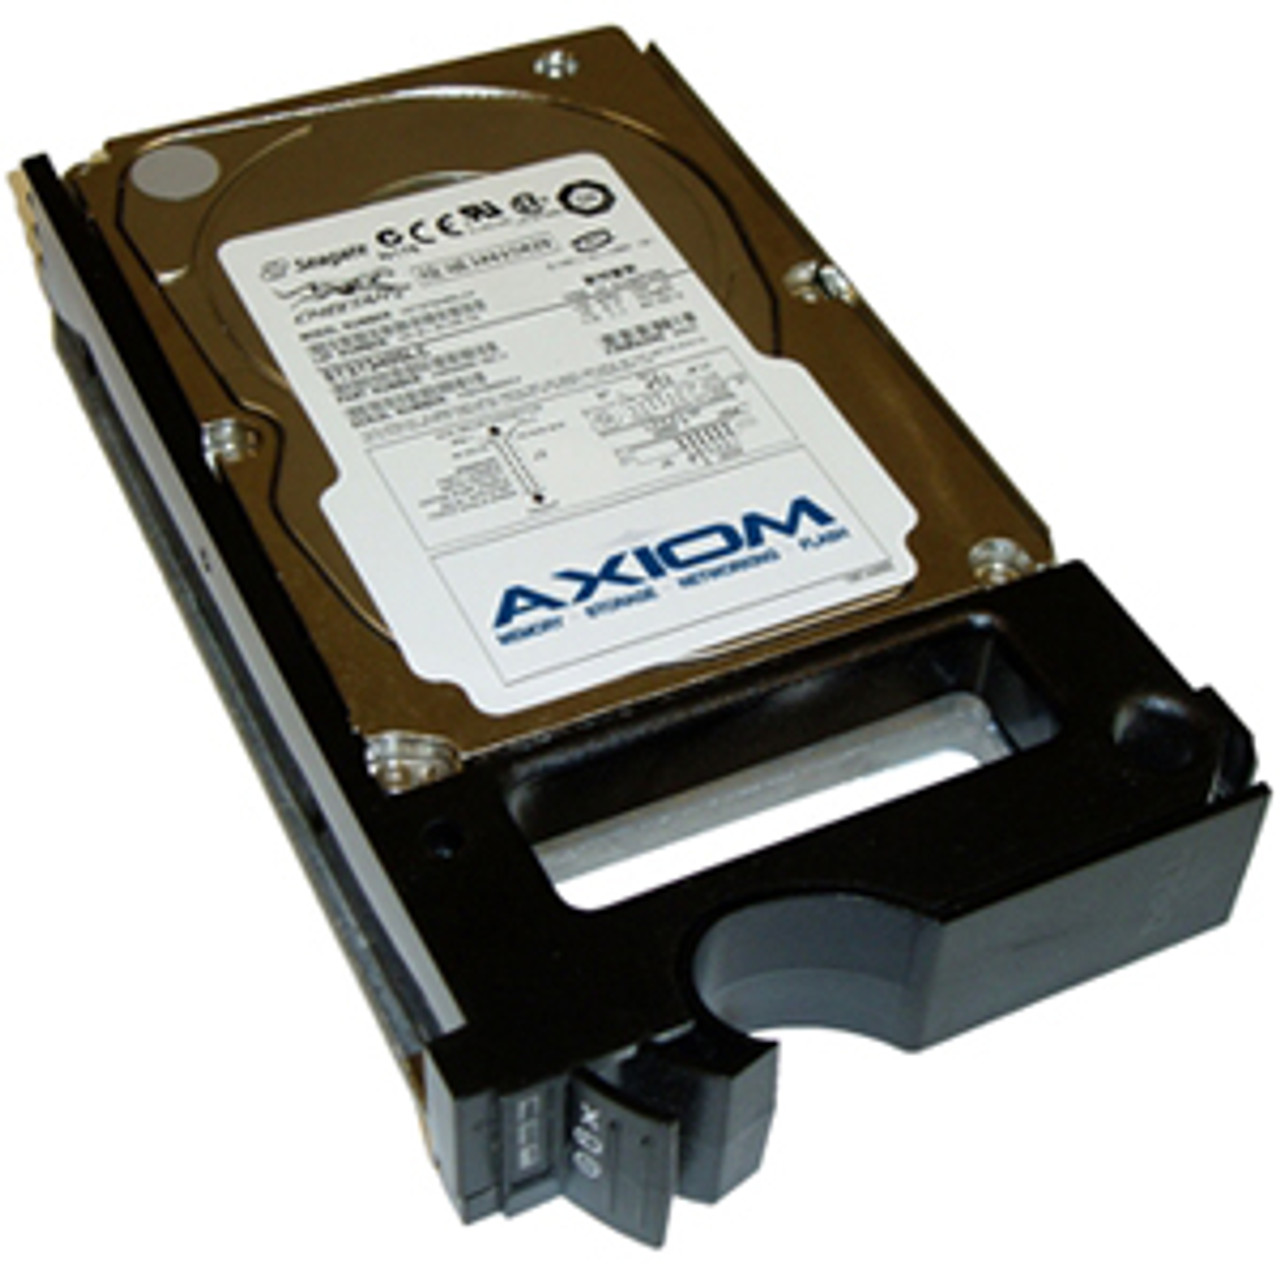 AXD-PE14610A - Axiom 146 GB Internal Hard Drive - SCSI - 10000 rpm - Hot Swappable